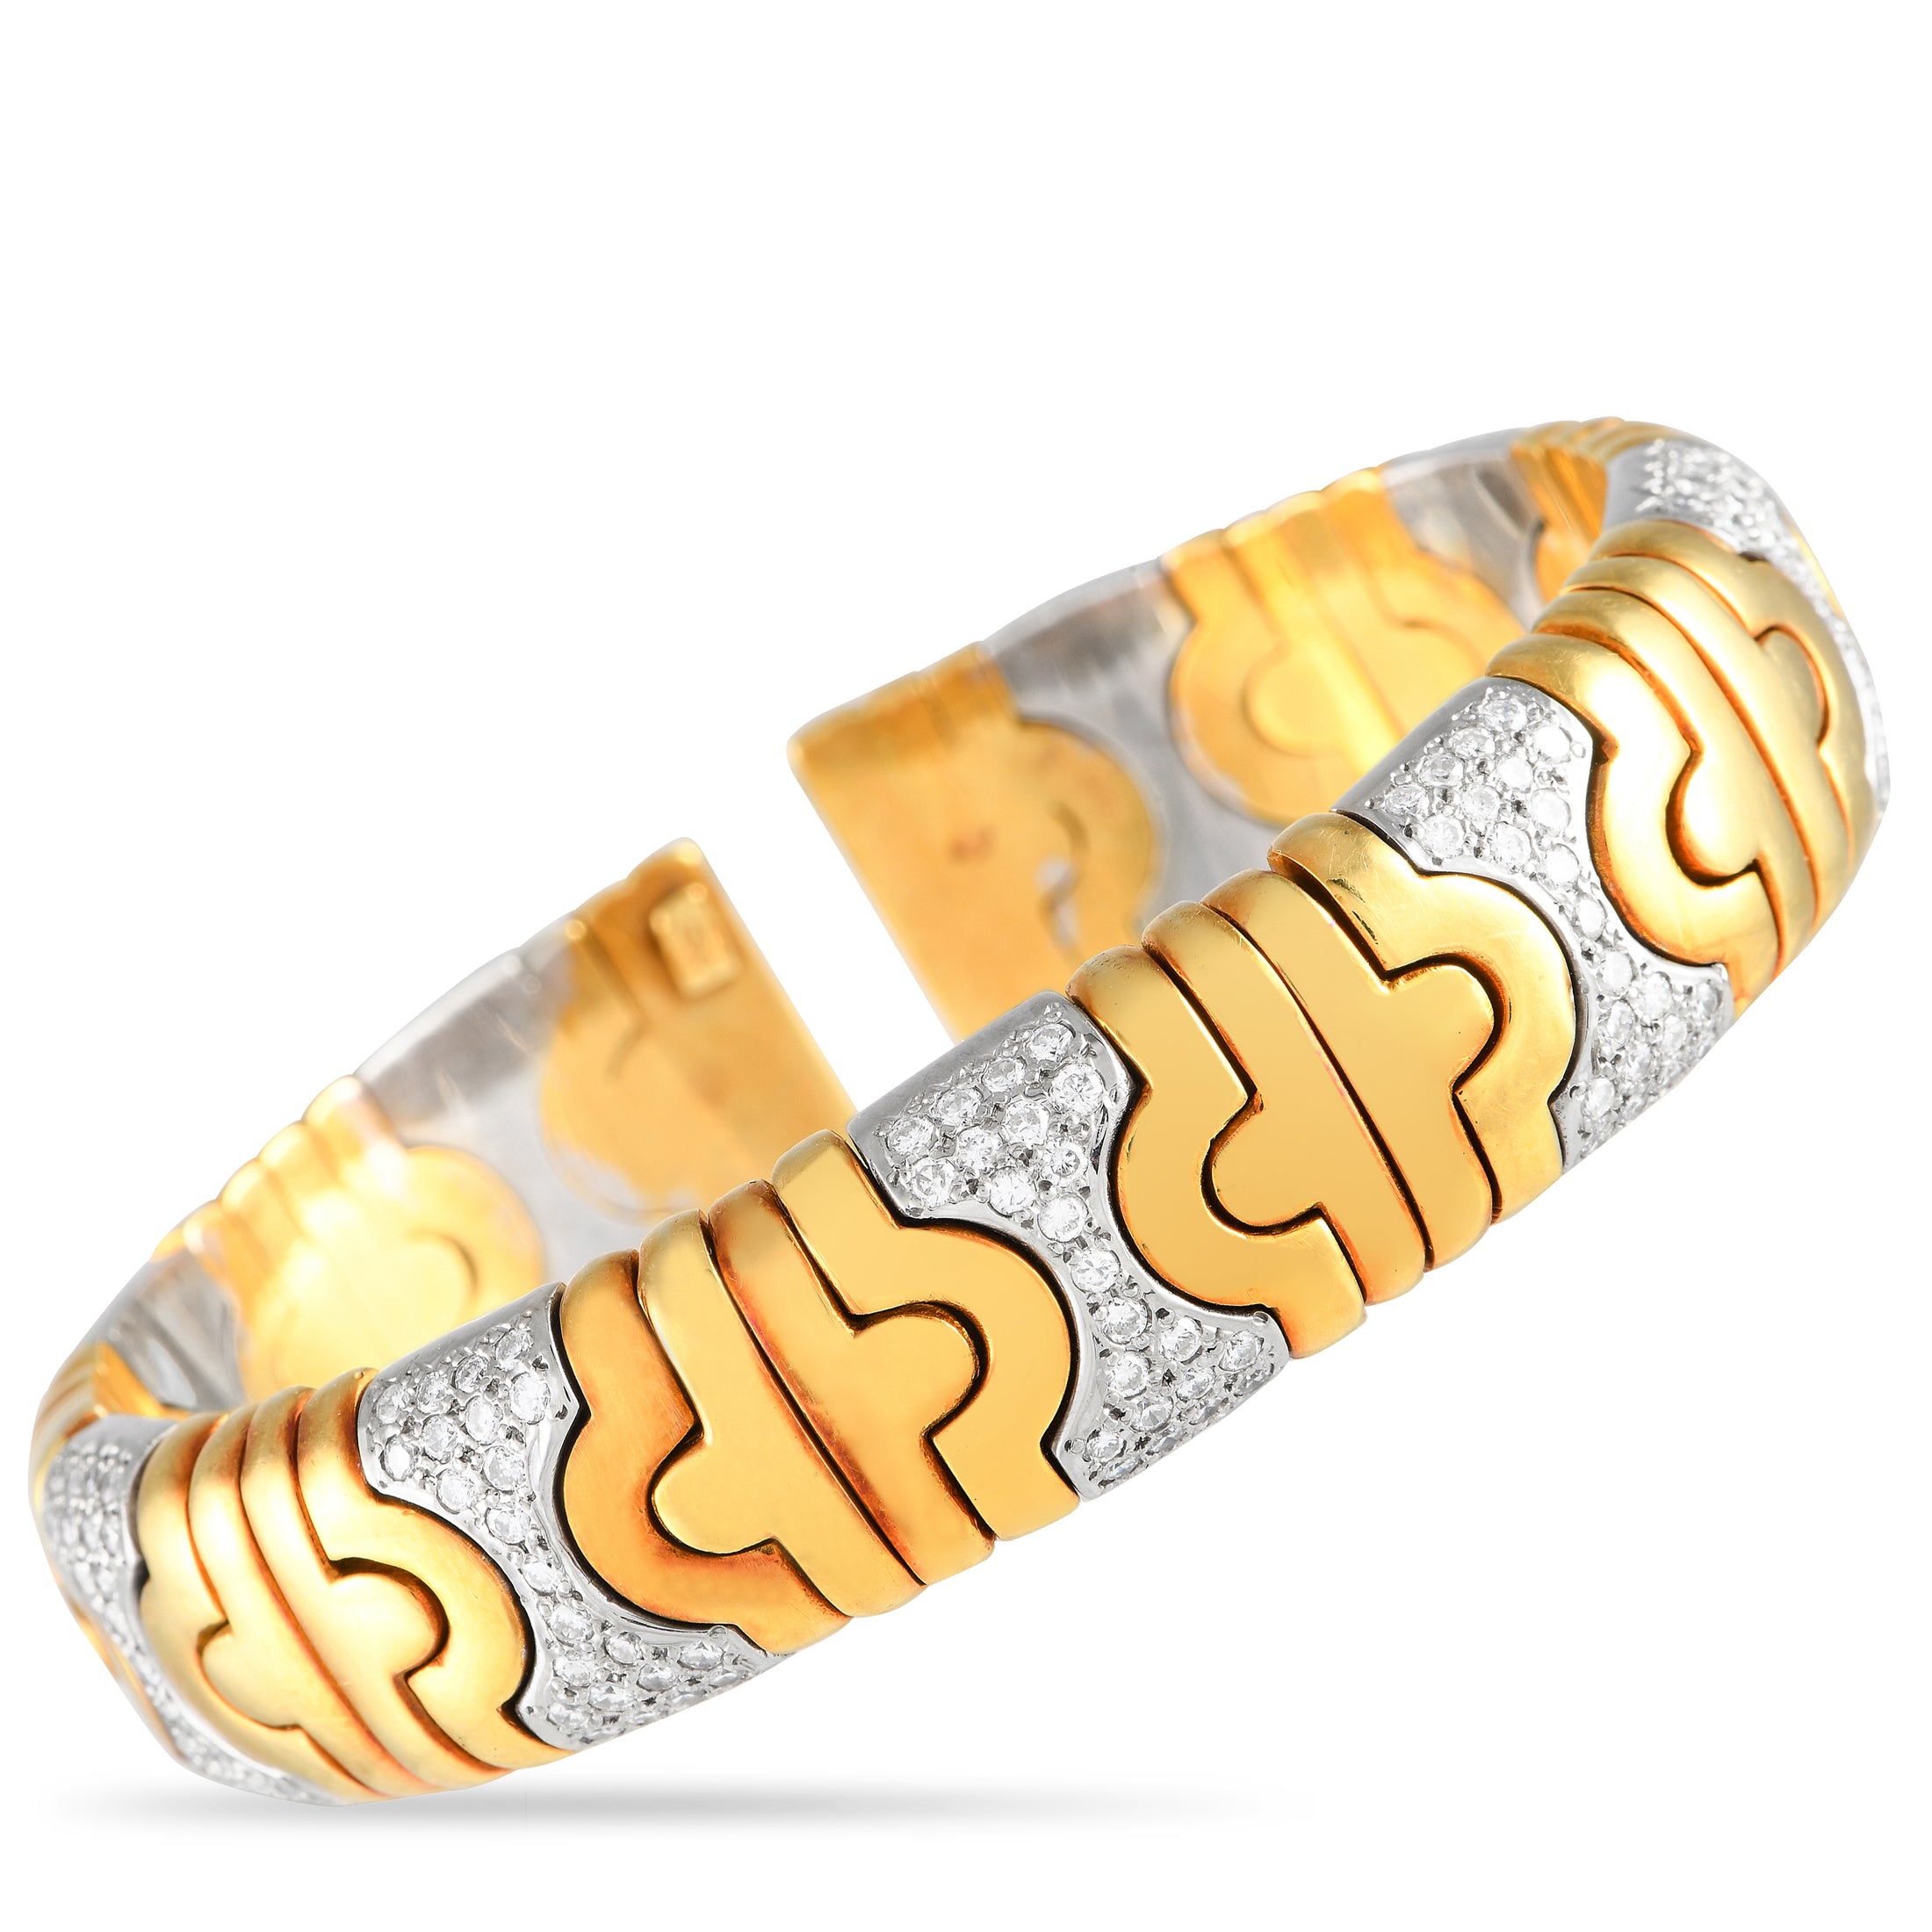 Non Branded Lb Exclusive 18k Yellow Gold 2.50ct Diamond Bangle Bracelet Mf08-052424